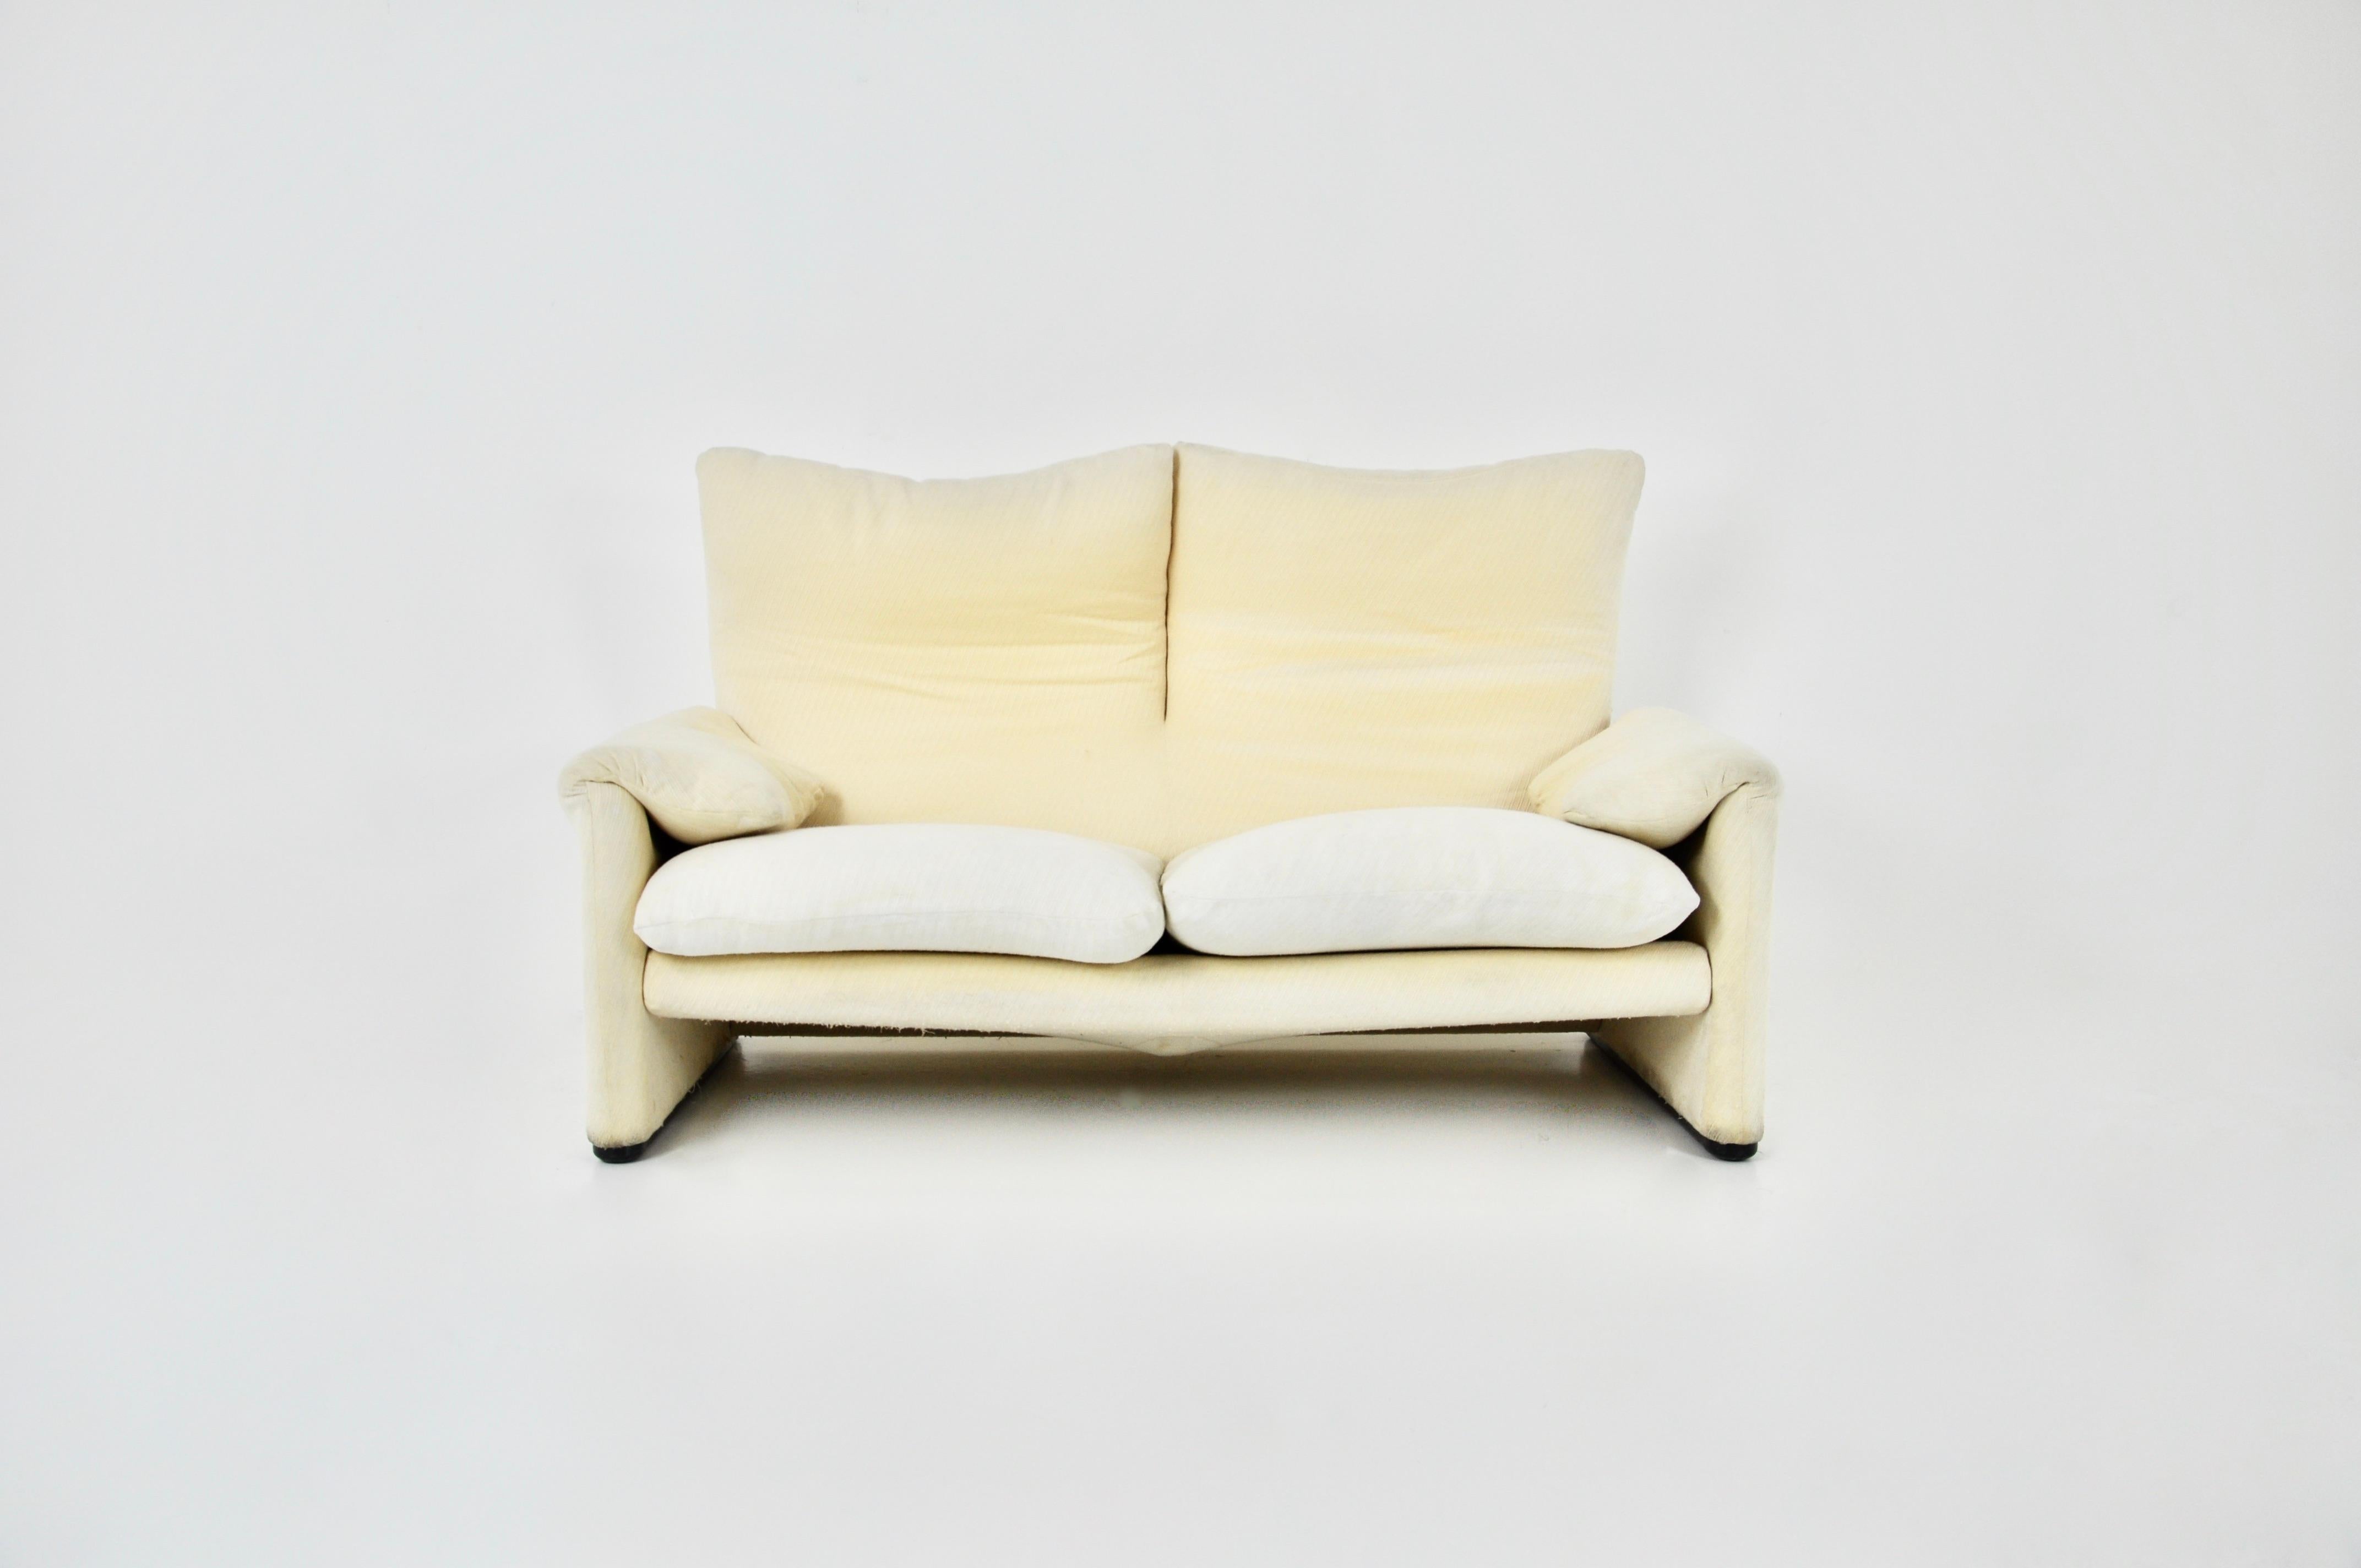 Late 20th Century Maralunga sofa by Vico Magistretti for Cassina, 1970s For Sale